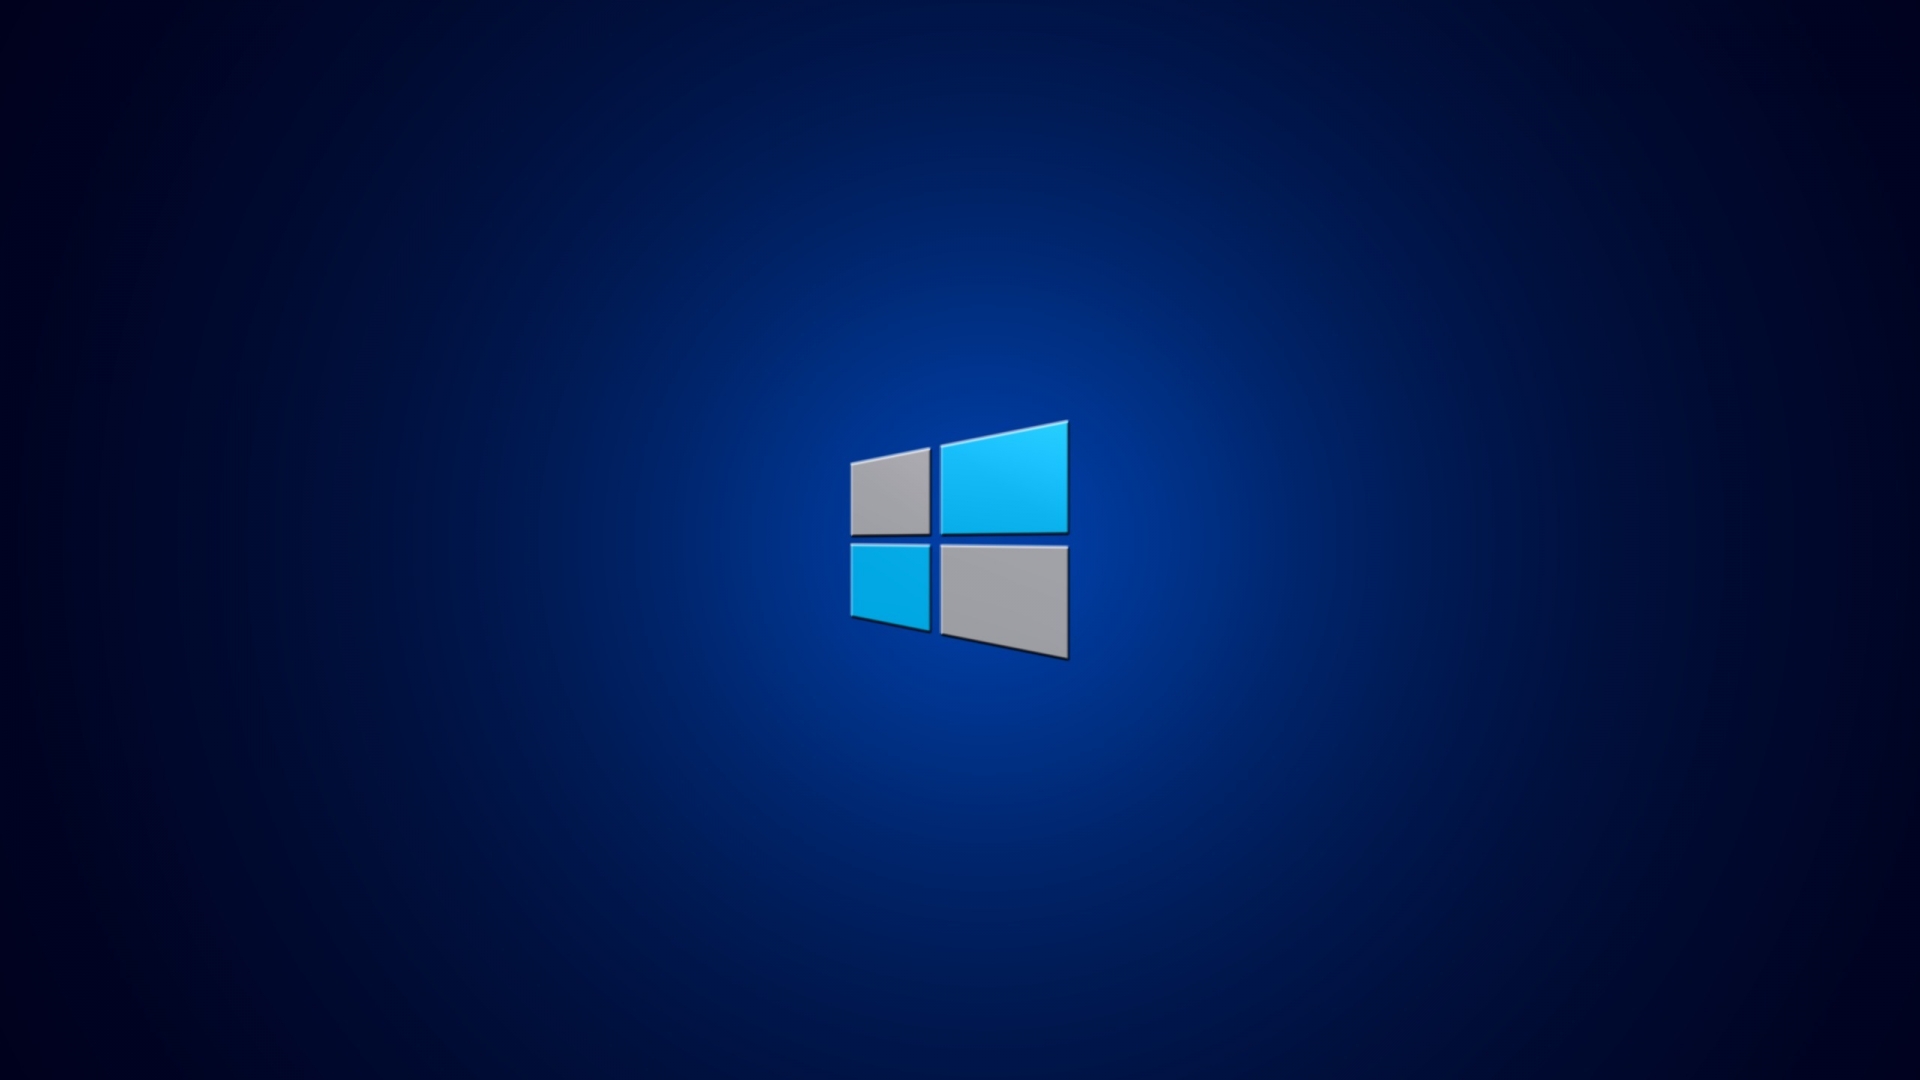 Windows HD Wallpaper For Your Desktop Background Or